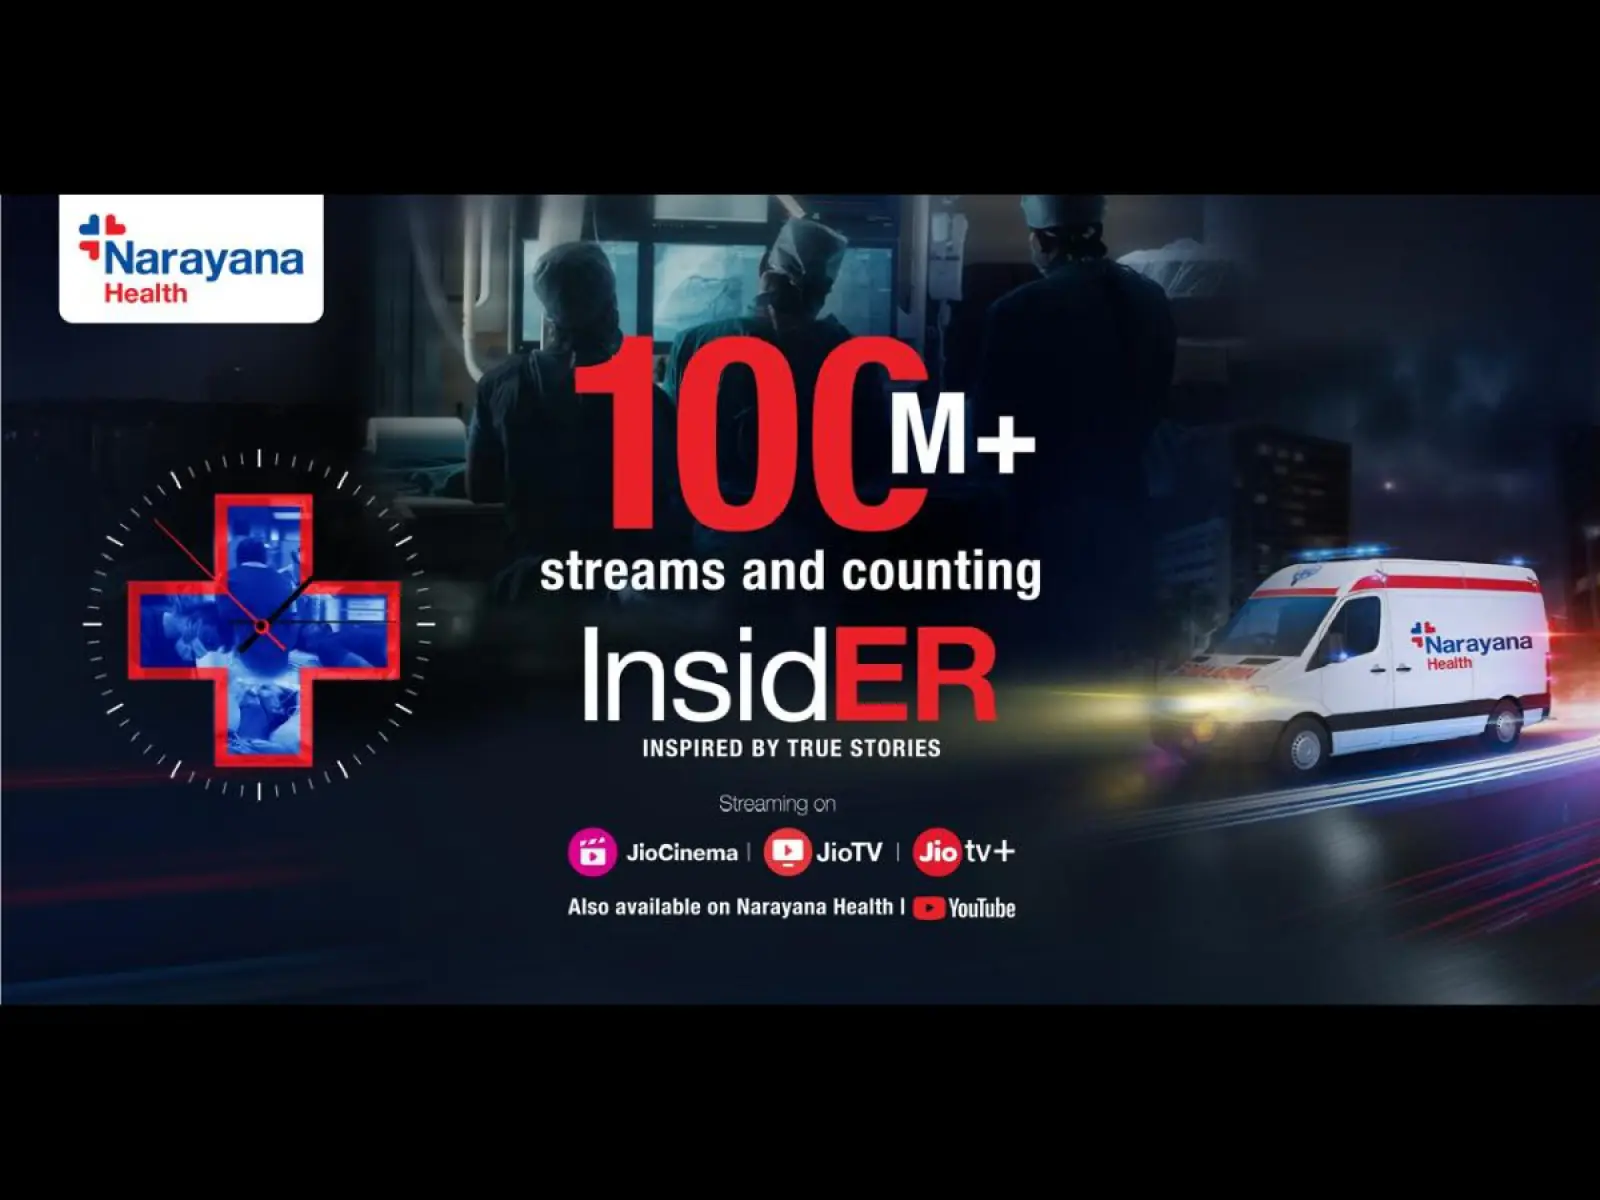 Narayana Health’s Ground breaking Docu-Series 'InsidER' Surpasses 100 Million Streams